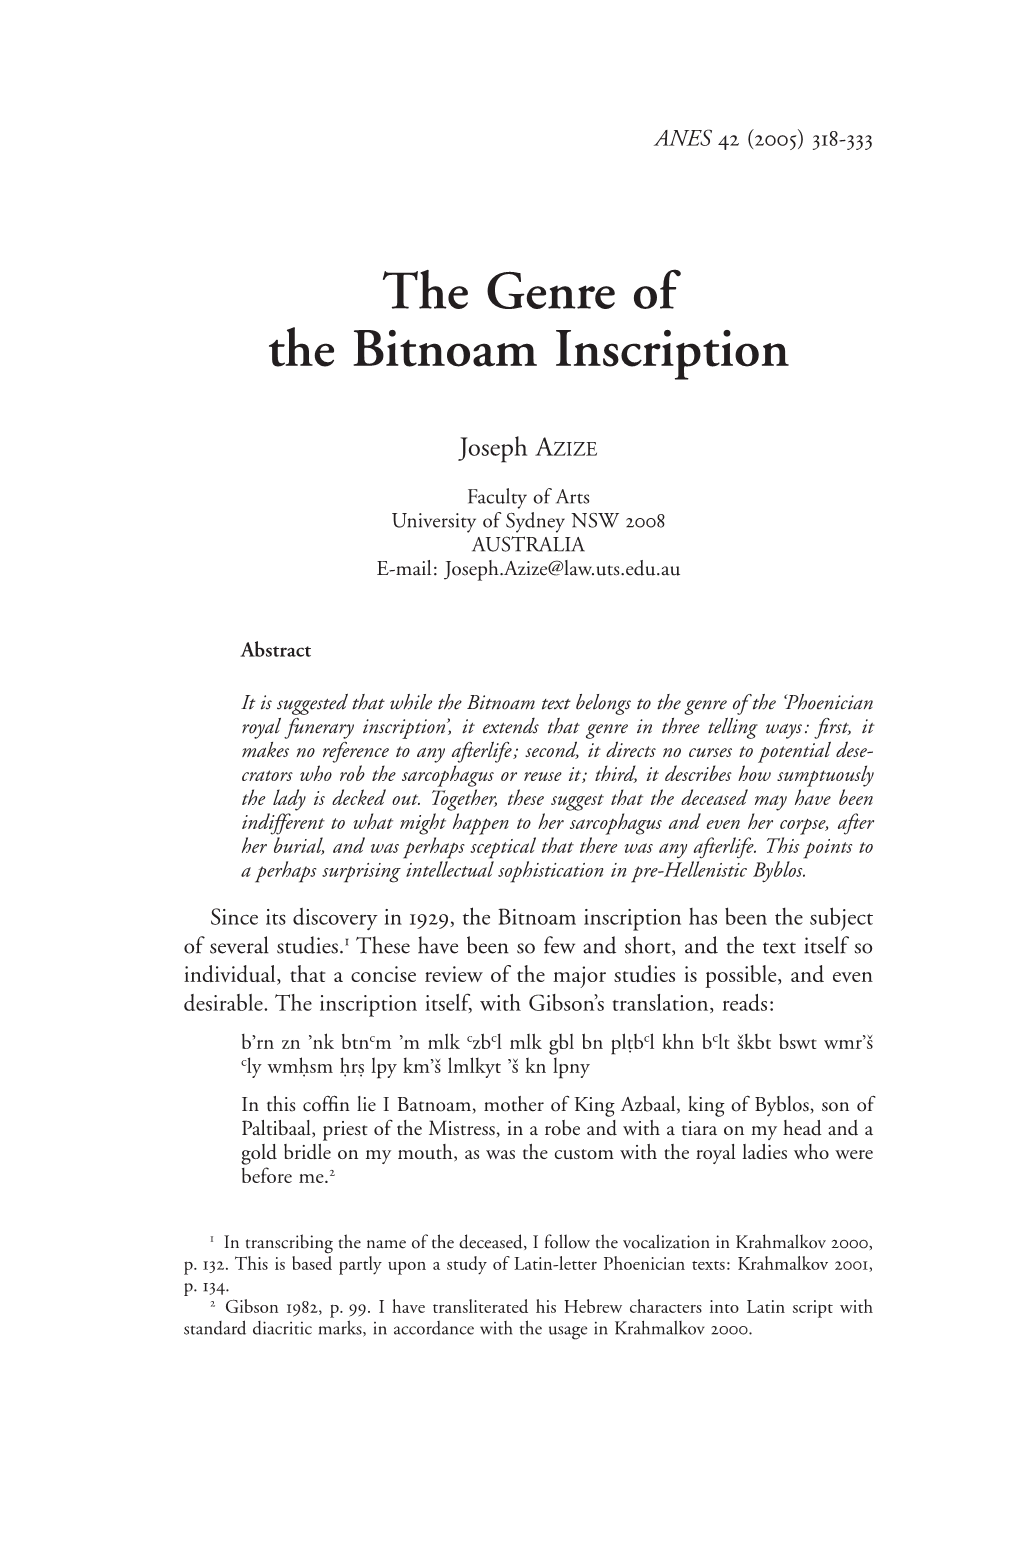 The Genre of the Bitnoam Inscription